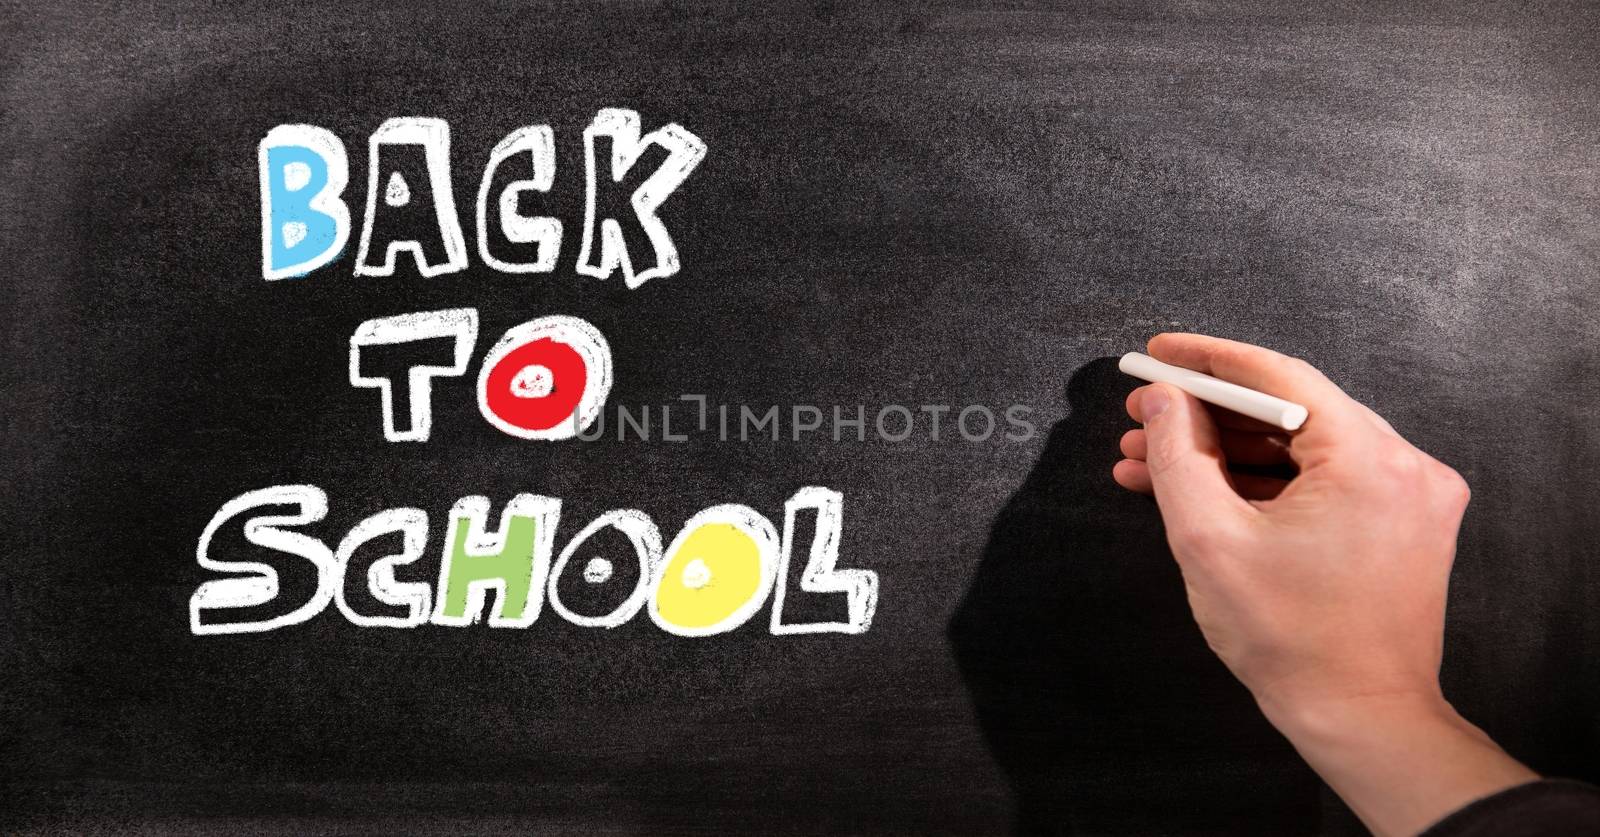 Digital composite of Back to school education drawings on blackboard for school